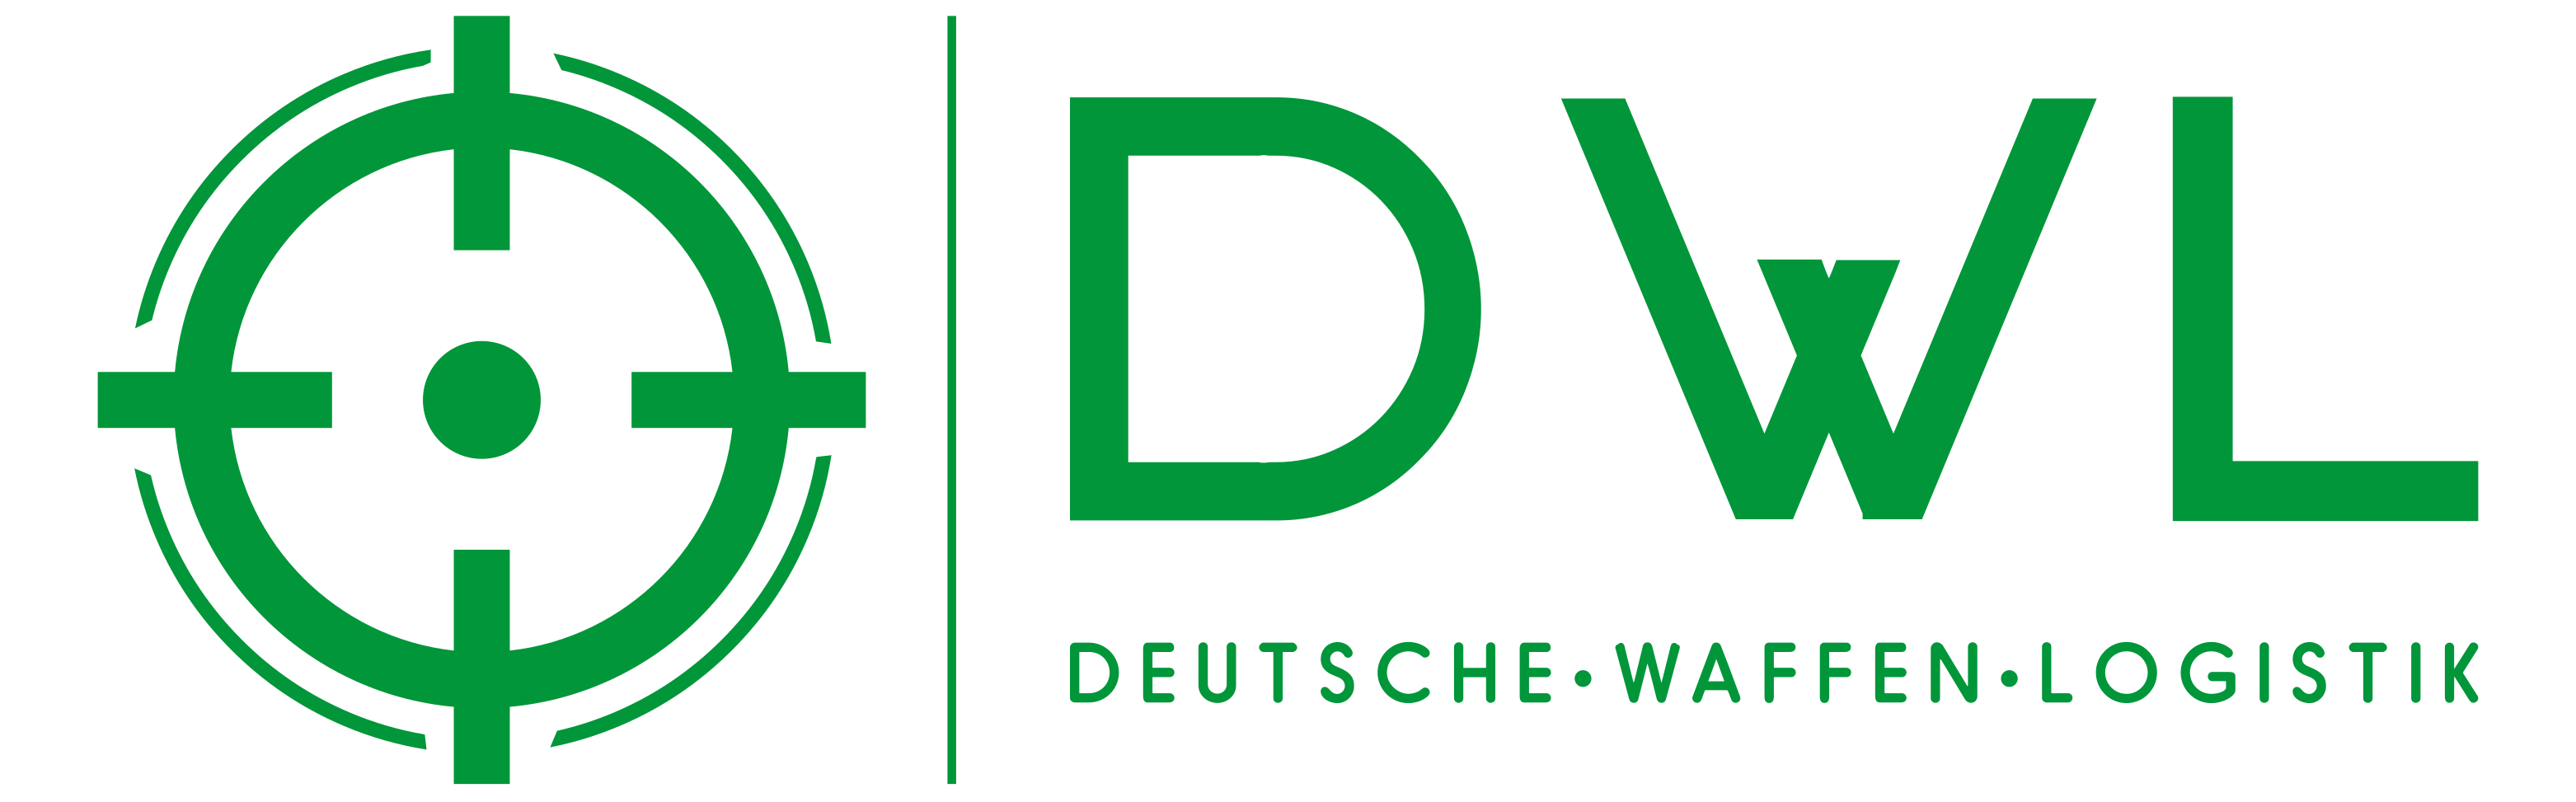 LOGO DWL Deutsche-Waffen-Logistik